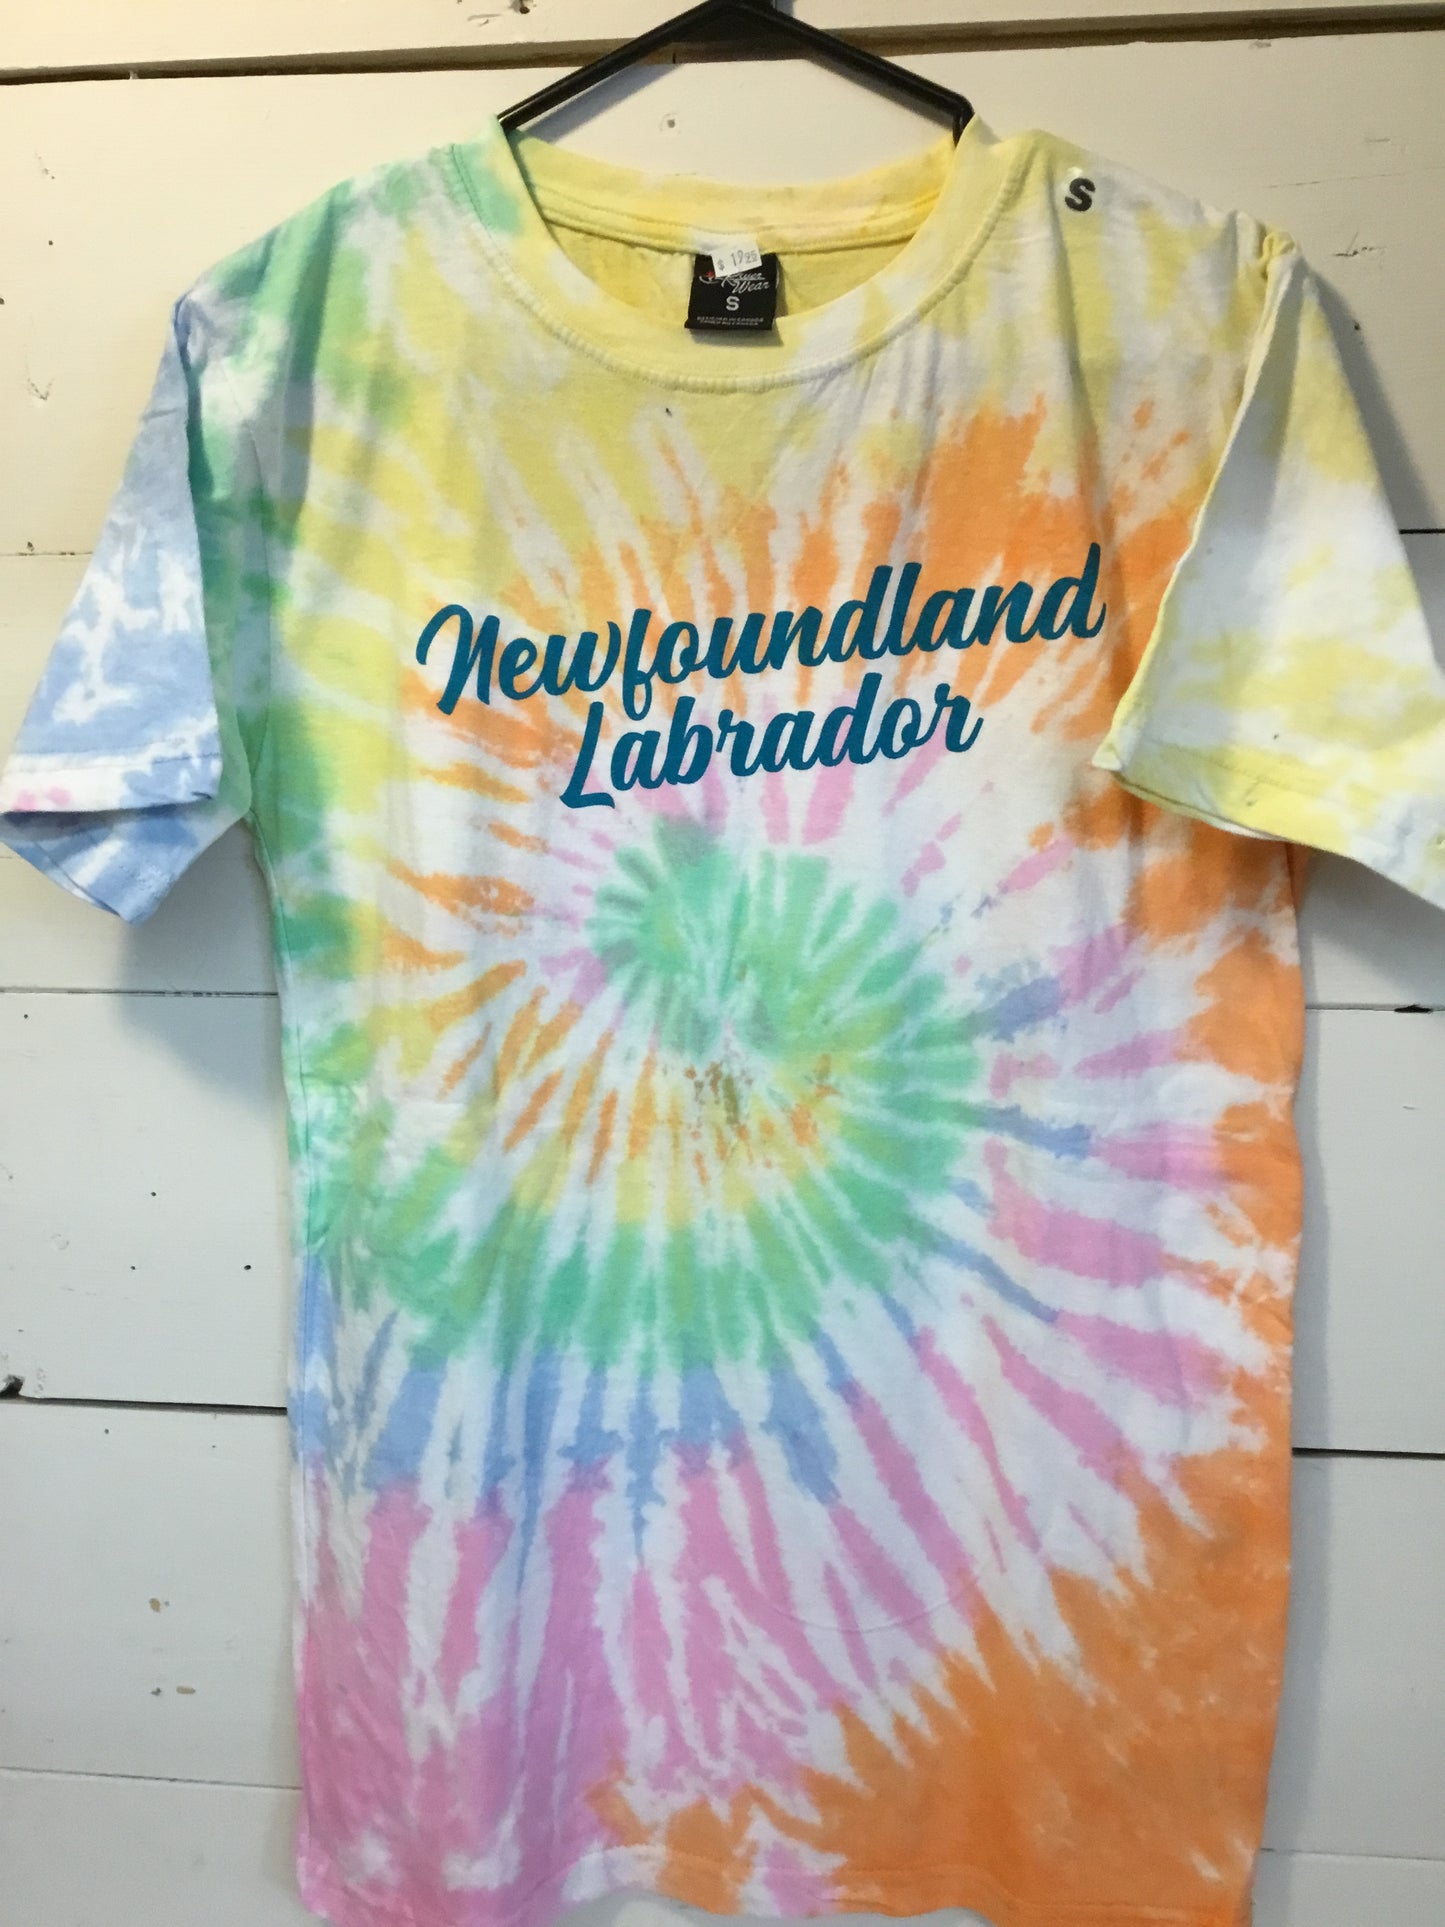 Unisex Adult Pastel Tie Dye T-shirt with Newfoundland Labrador Script